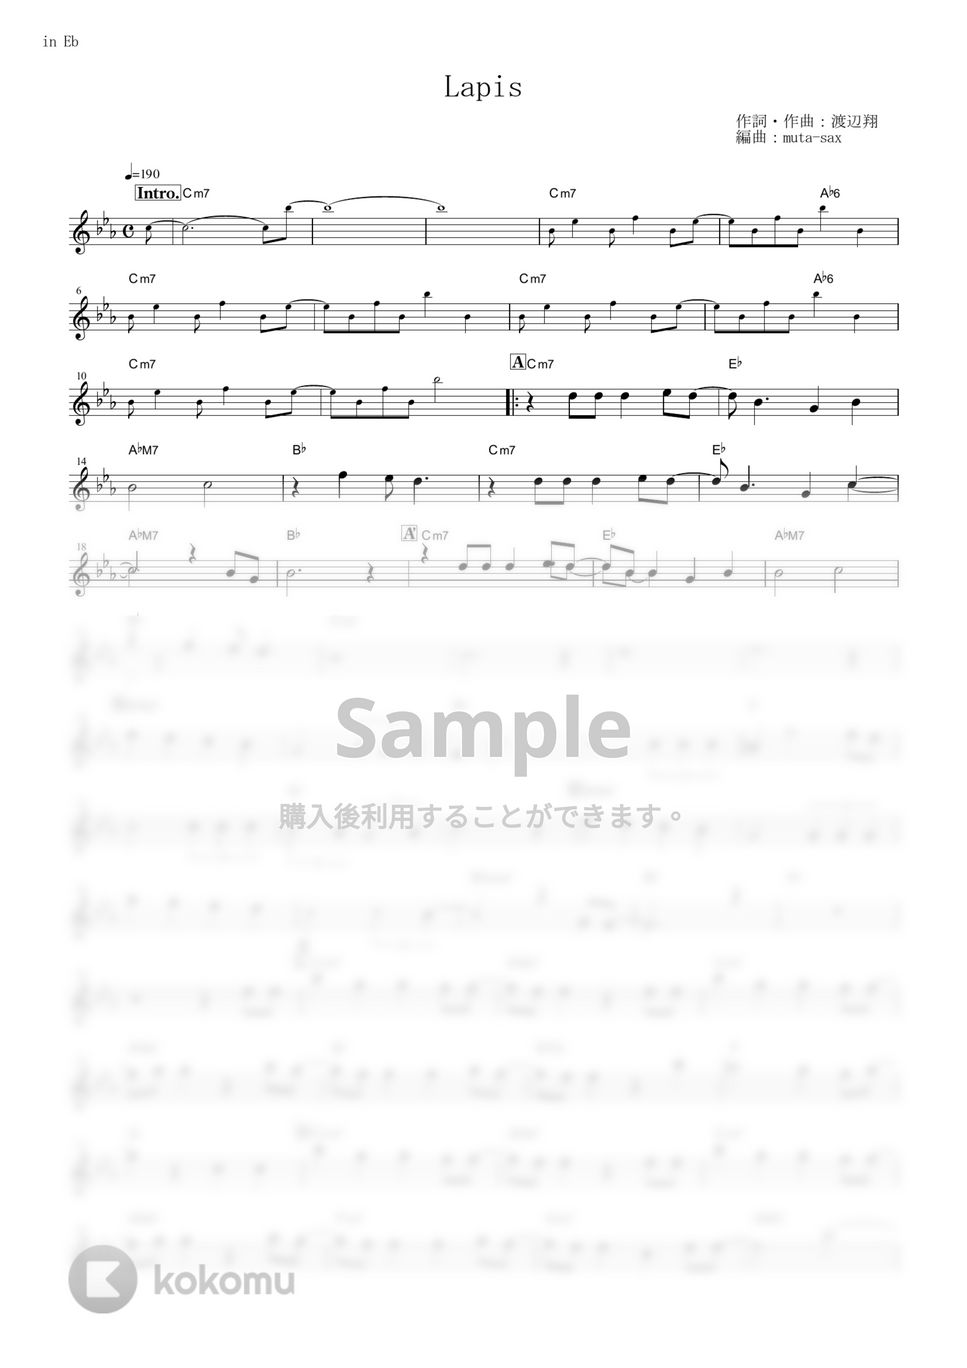 TrySail - Lapis (『マギアレコード 魔法少女まどか☆マギカ外伝 2nd SEASON -覚醒前夜-』 / in Eb) by muta-sax